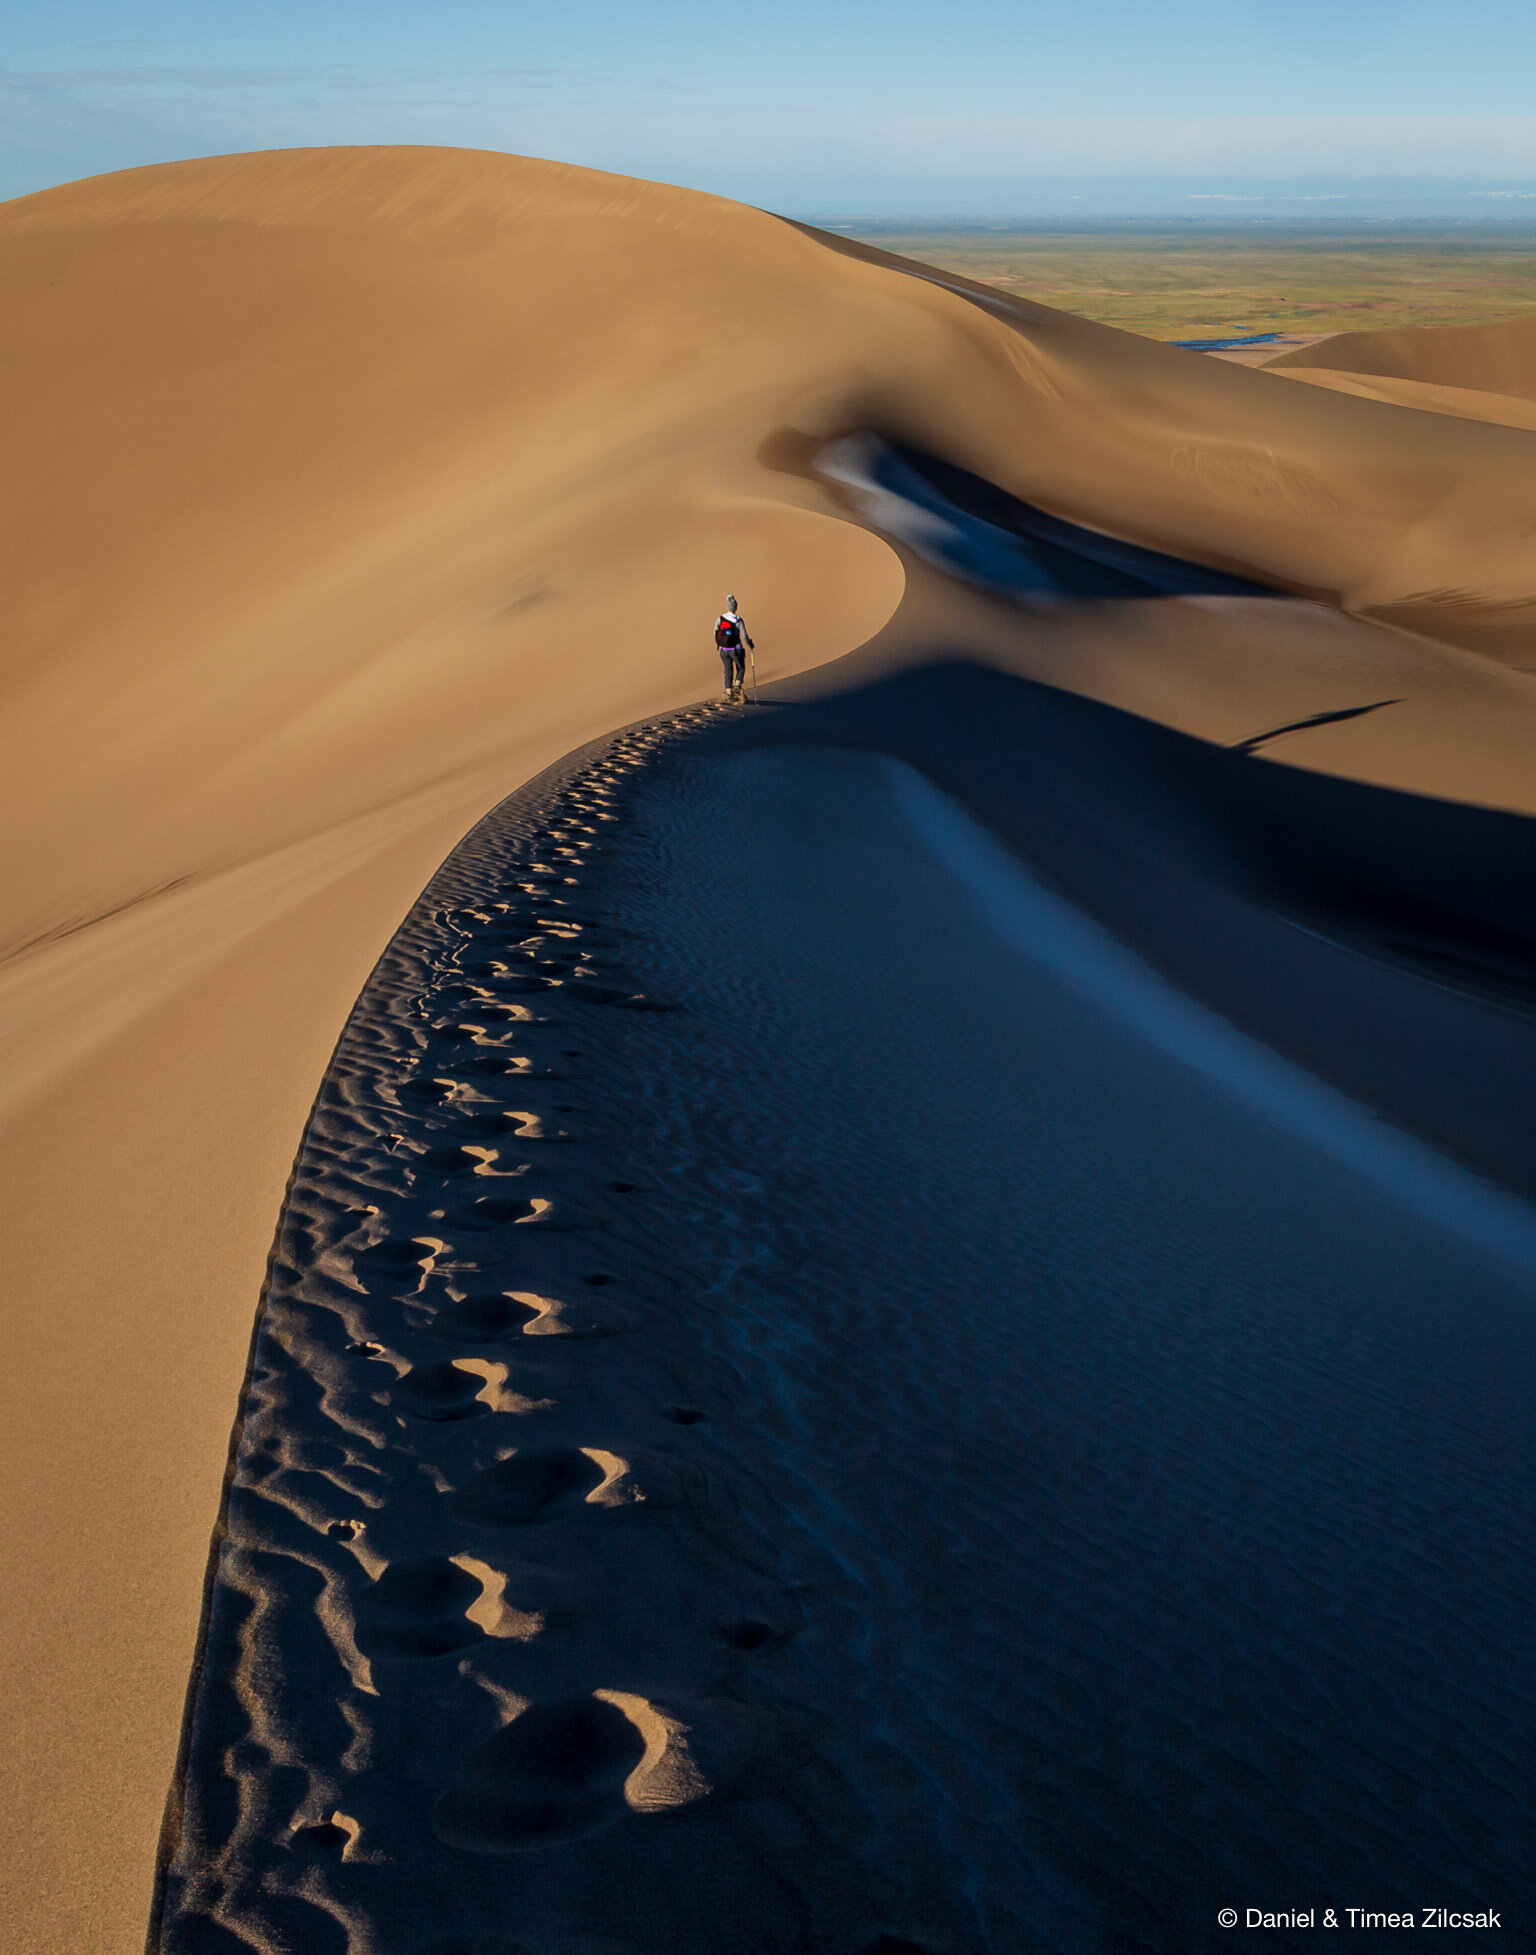 Great-Sand-Dunes-National-Park-9197.jpg